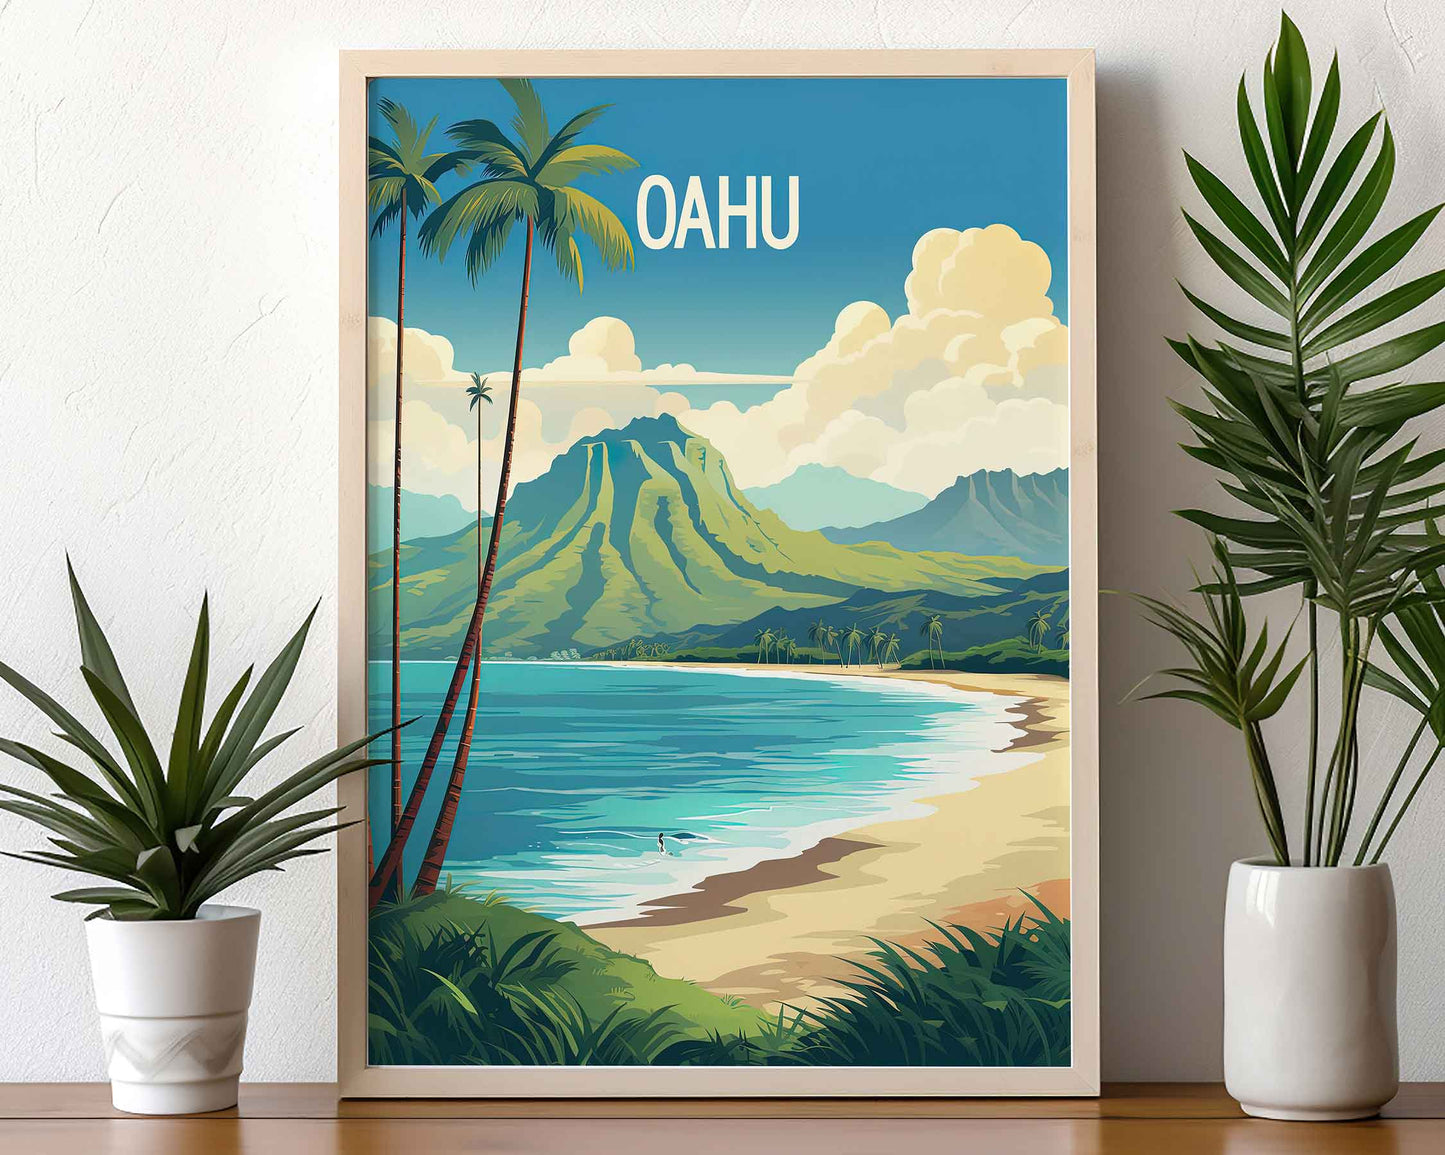 Framed Image of Oahu Hawaii Travel Wall Art Poster Prints Illustration